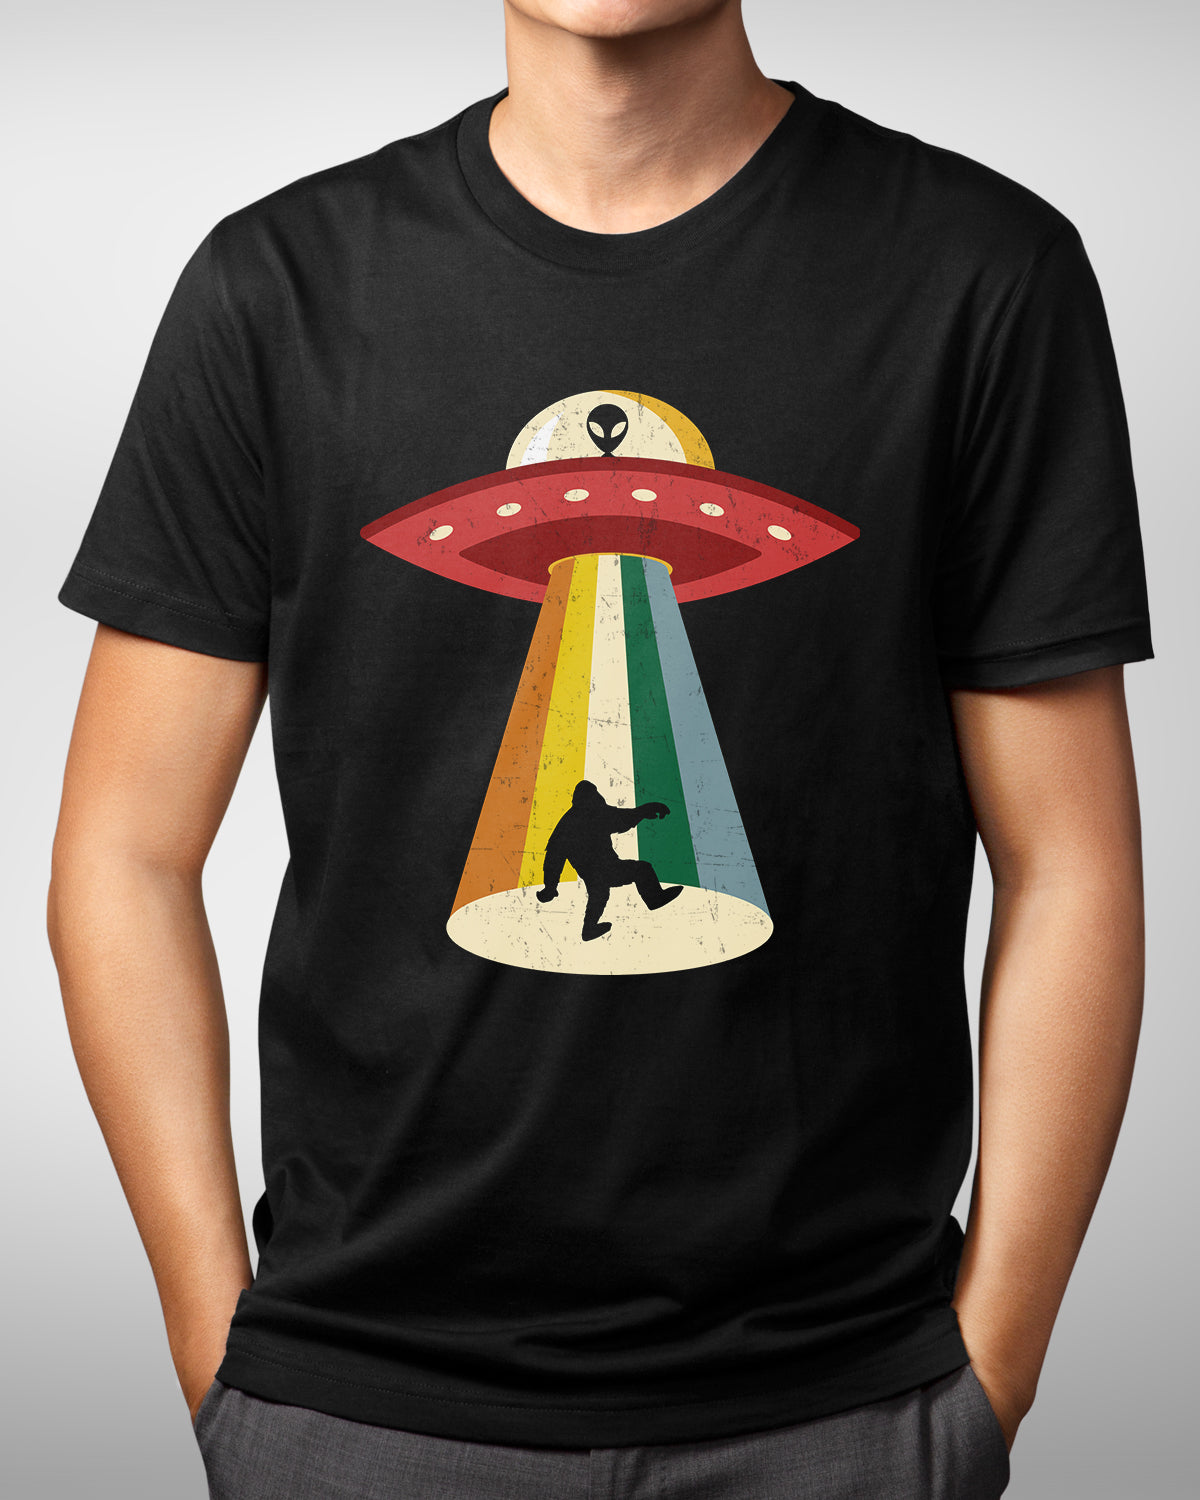 Vintage UFO Abduction Tee - Bigfoot Sasquatch - Get In Loser Funny Alien Shirt